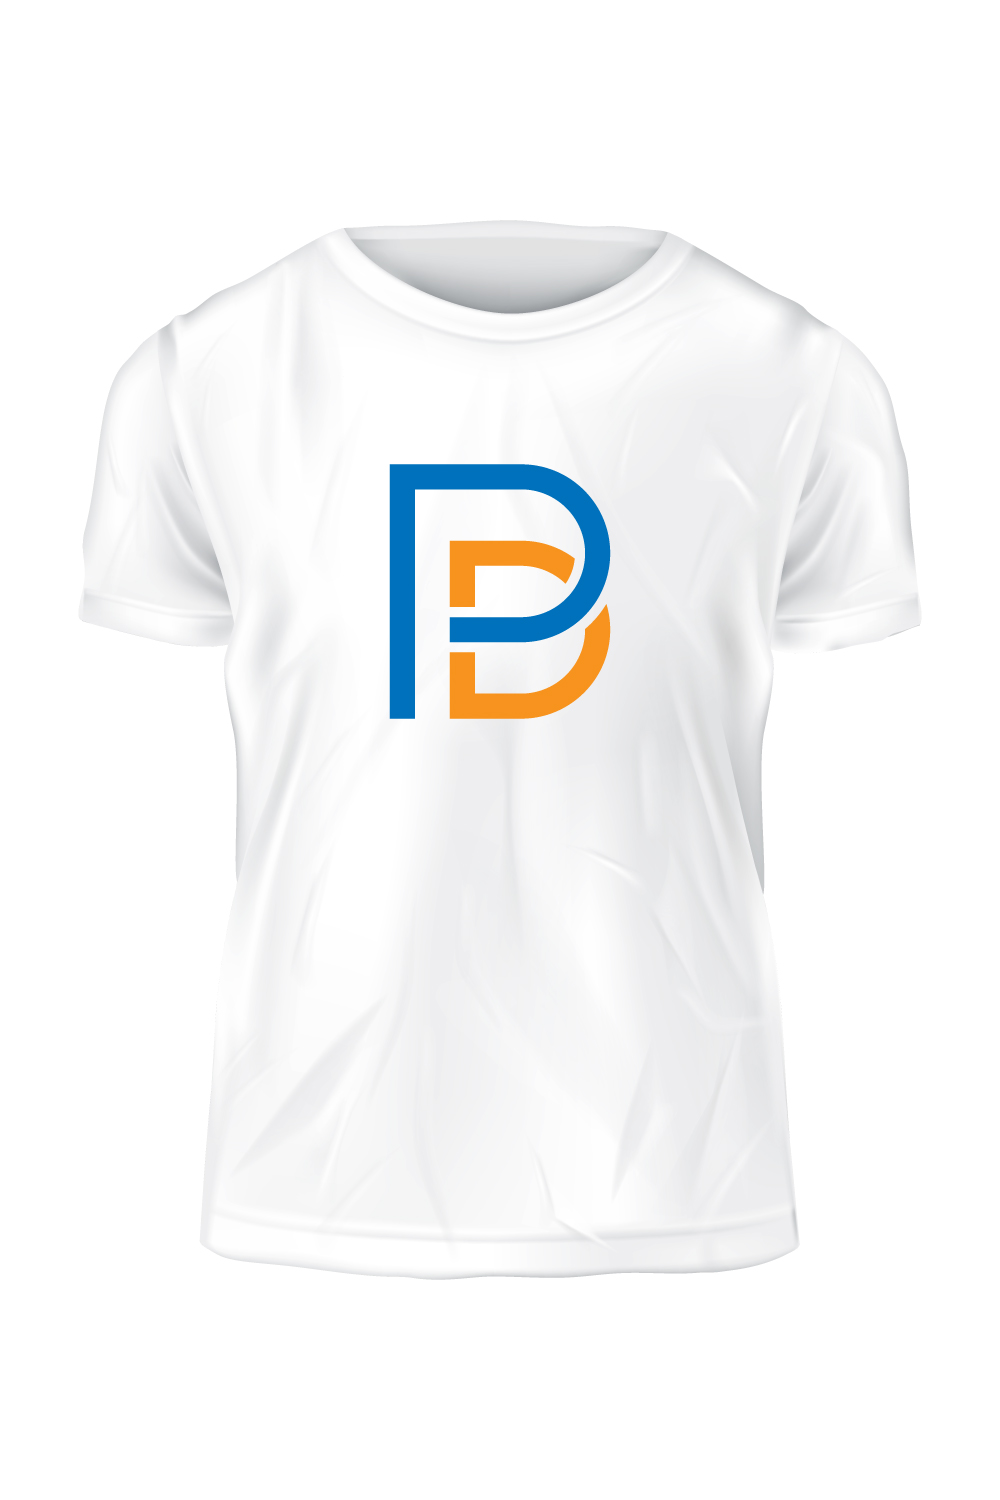 PD logo design pinterest preview image.